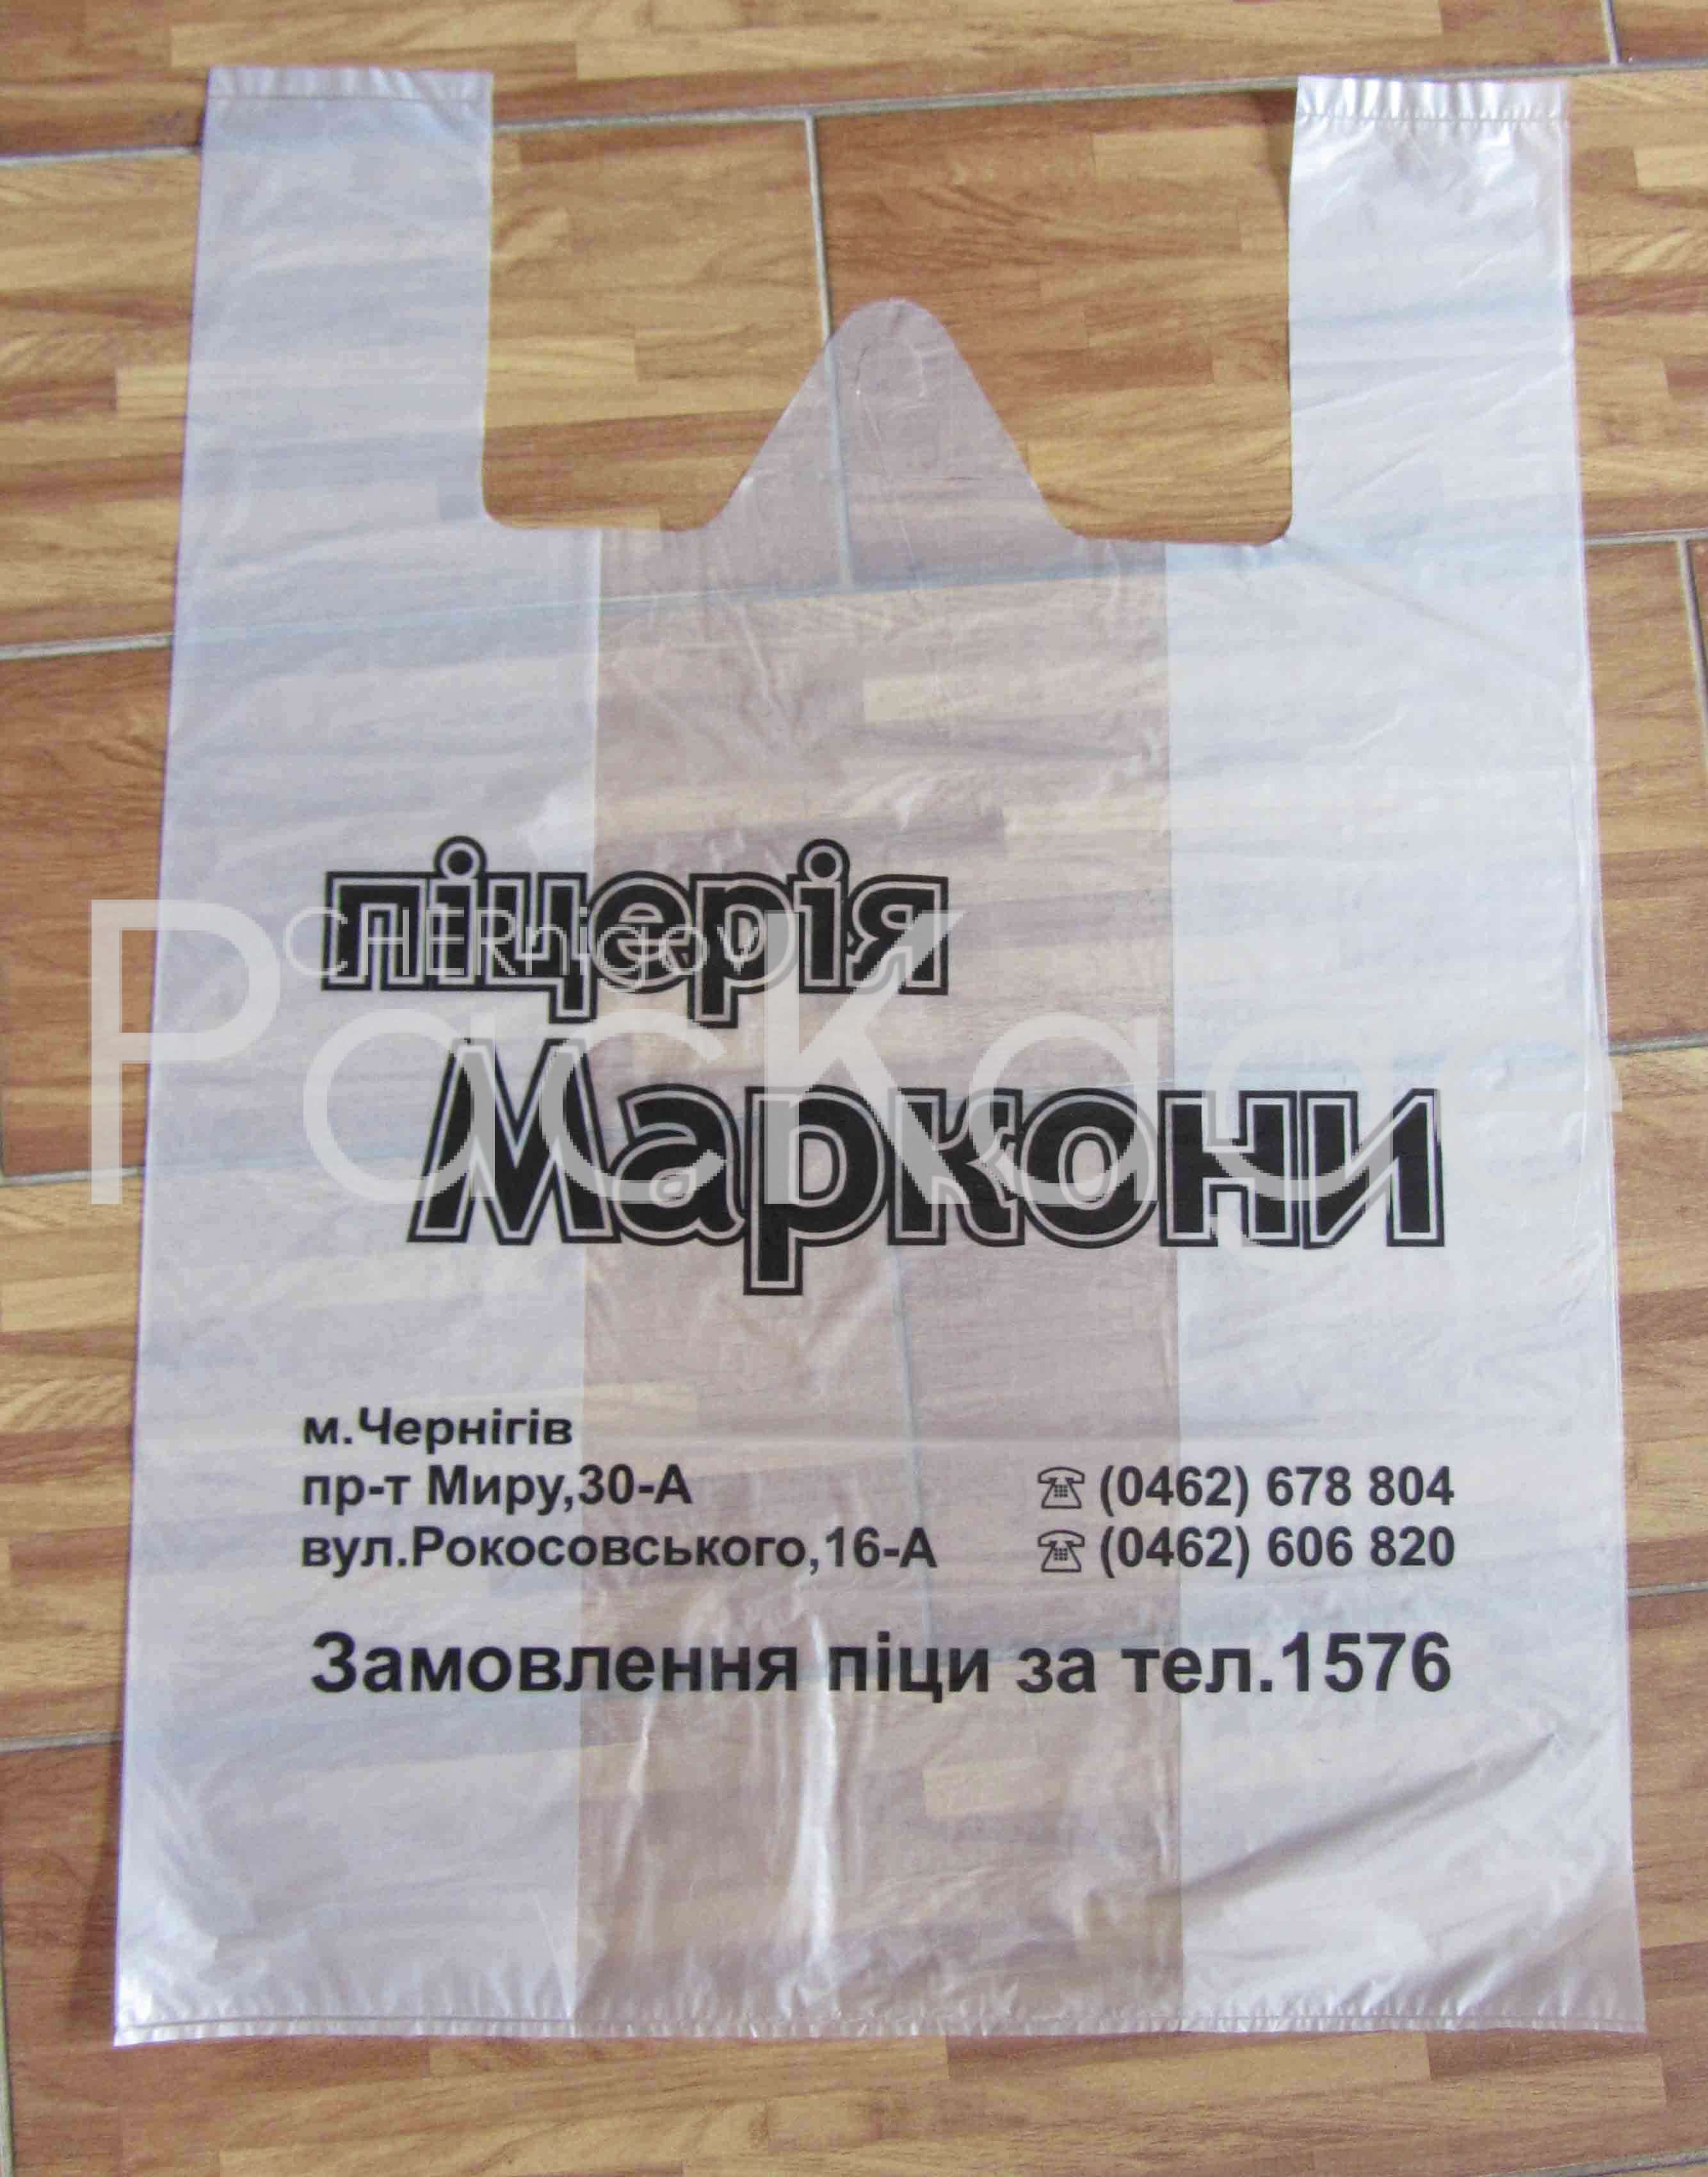 Как производят целлофановые пакеты Chernigov Package - Photo IMG_6488